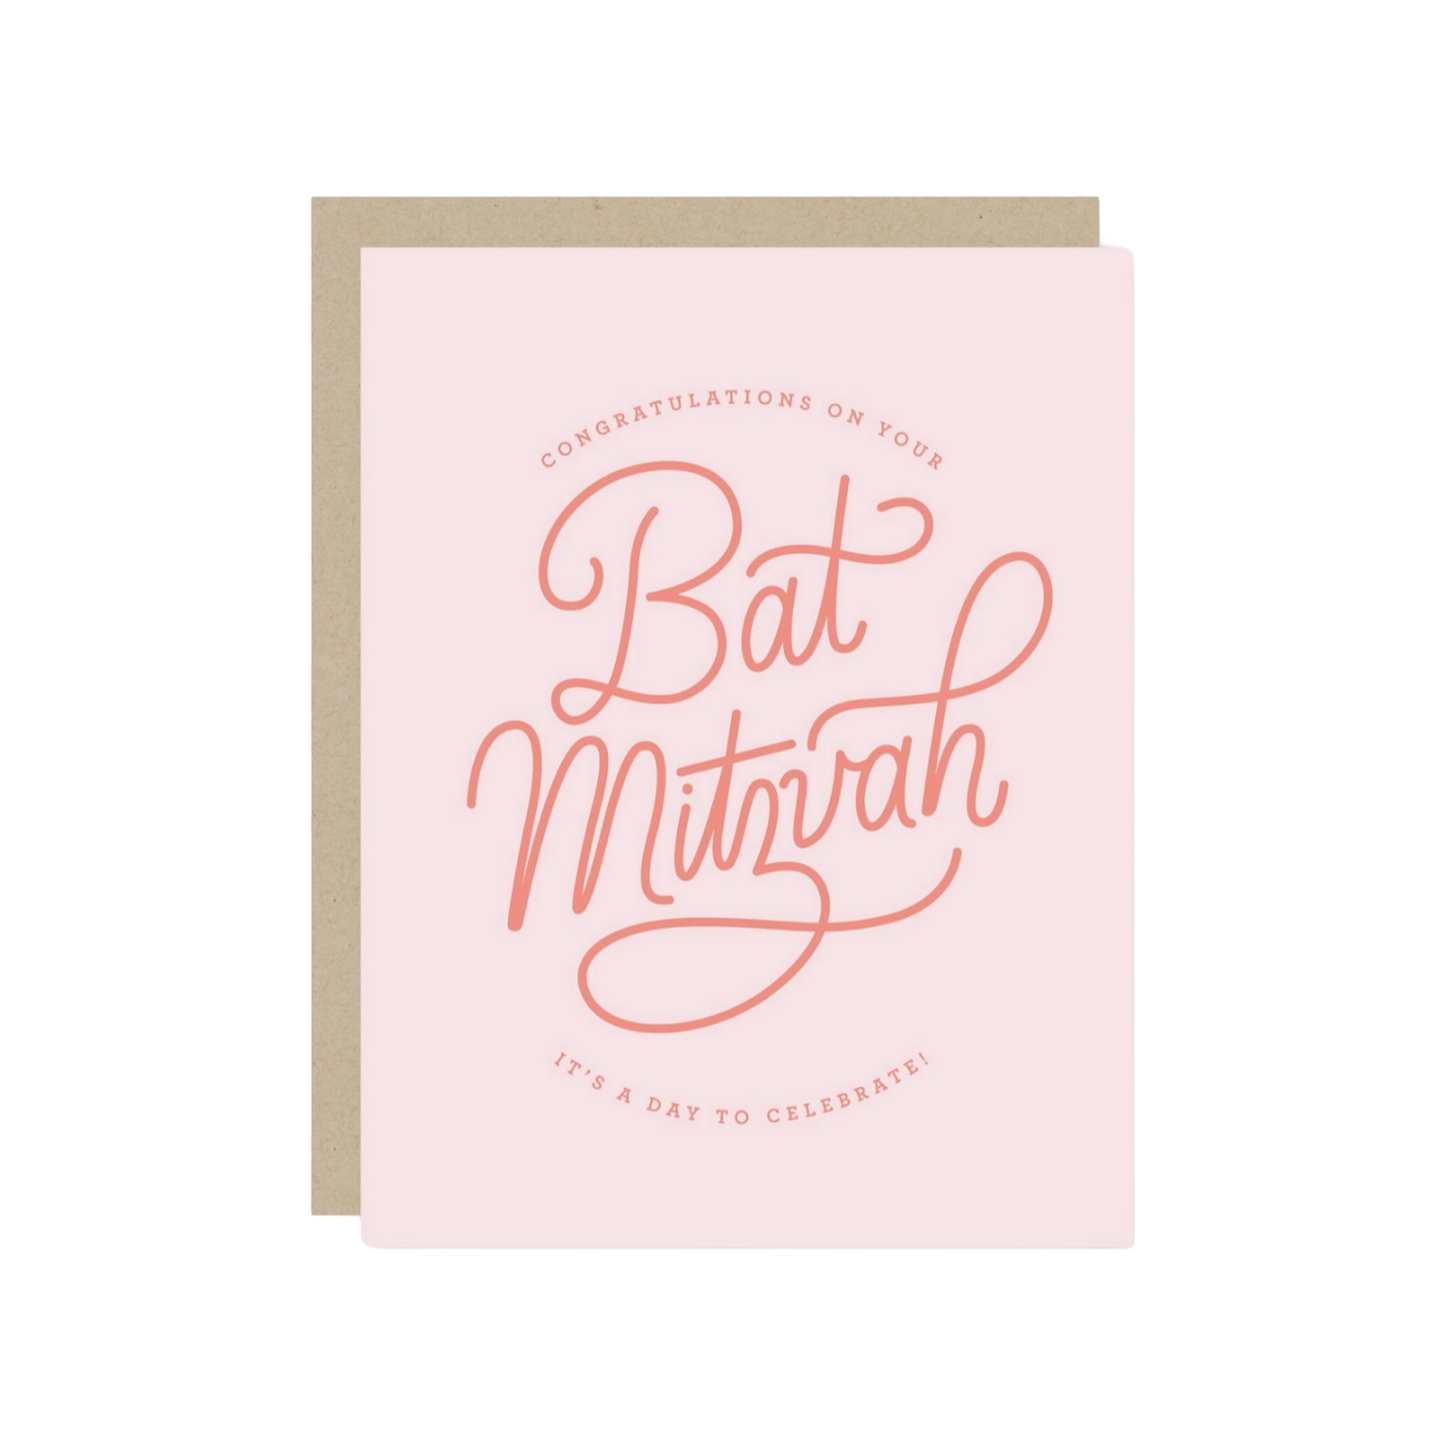 Congrats Bat Mitzvah Card by 2021 Co. 